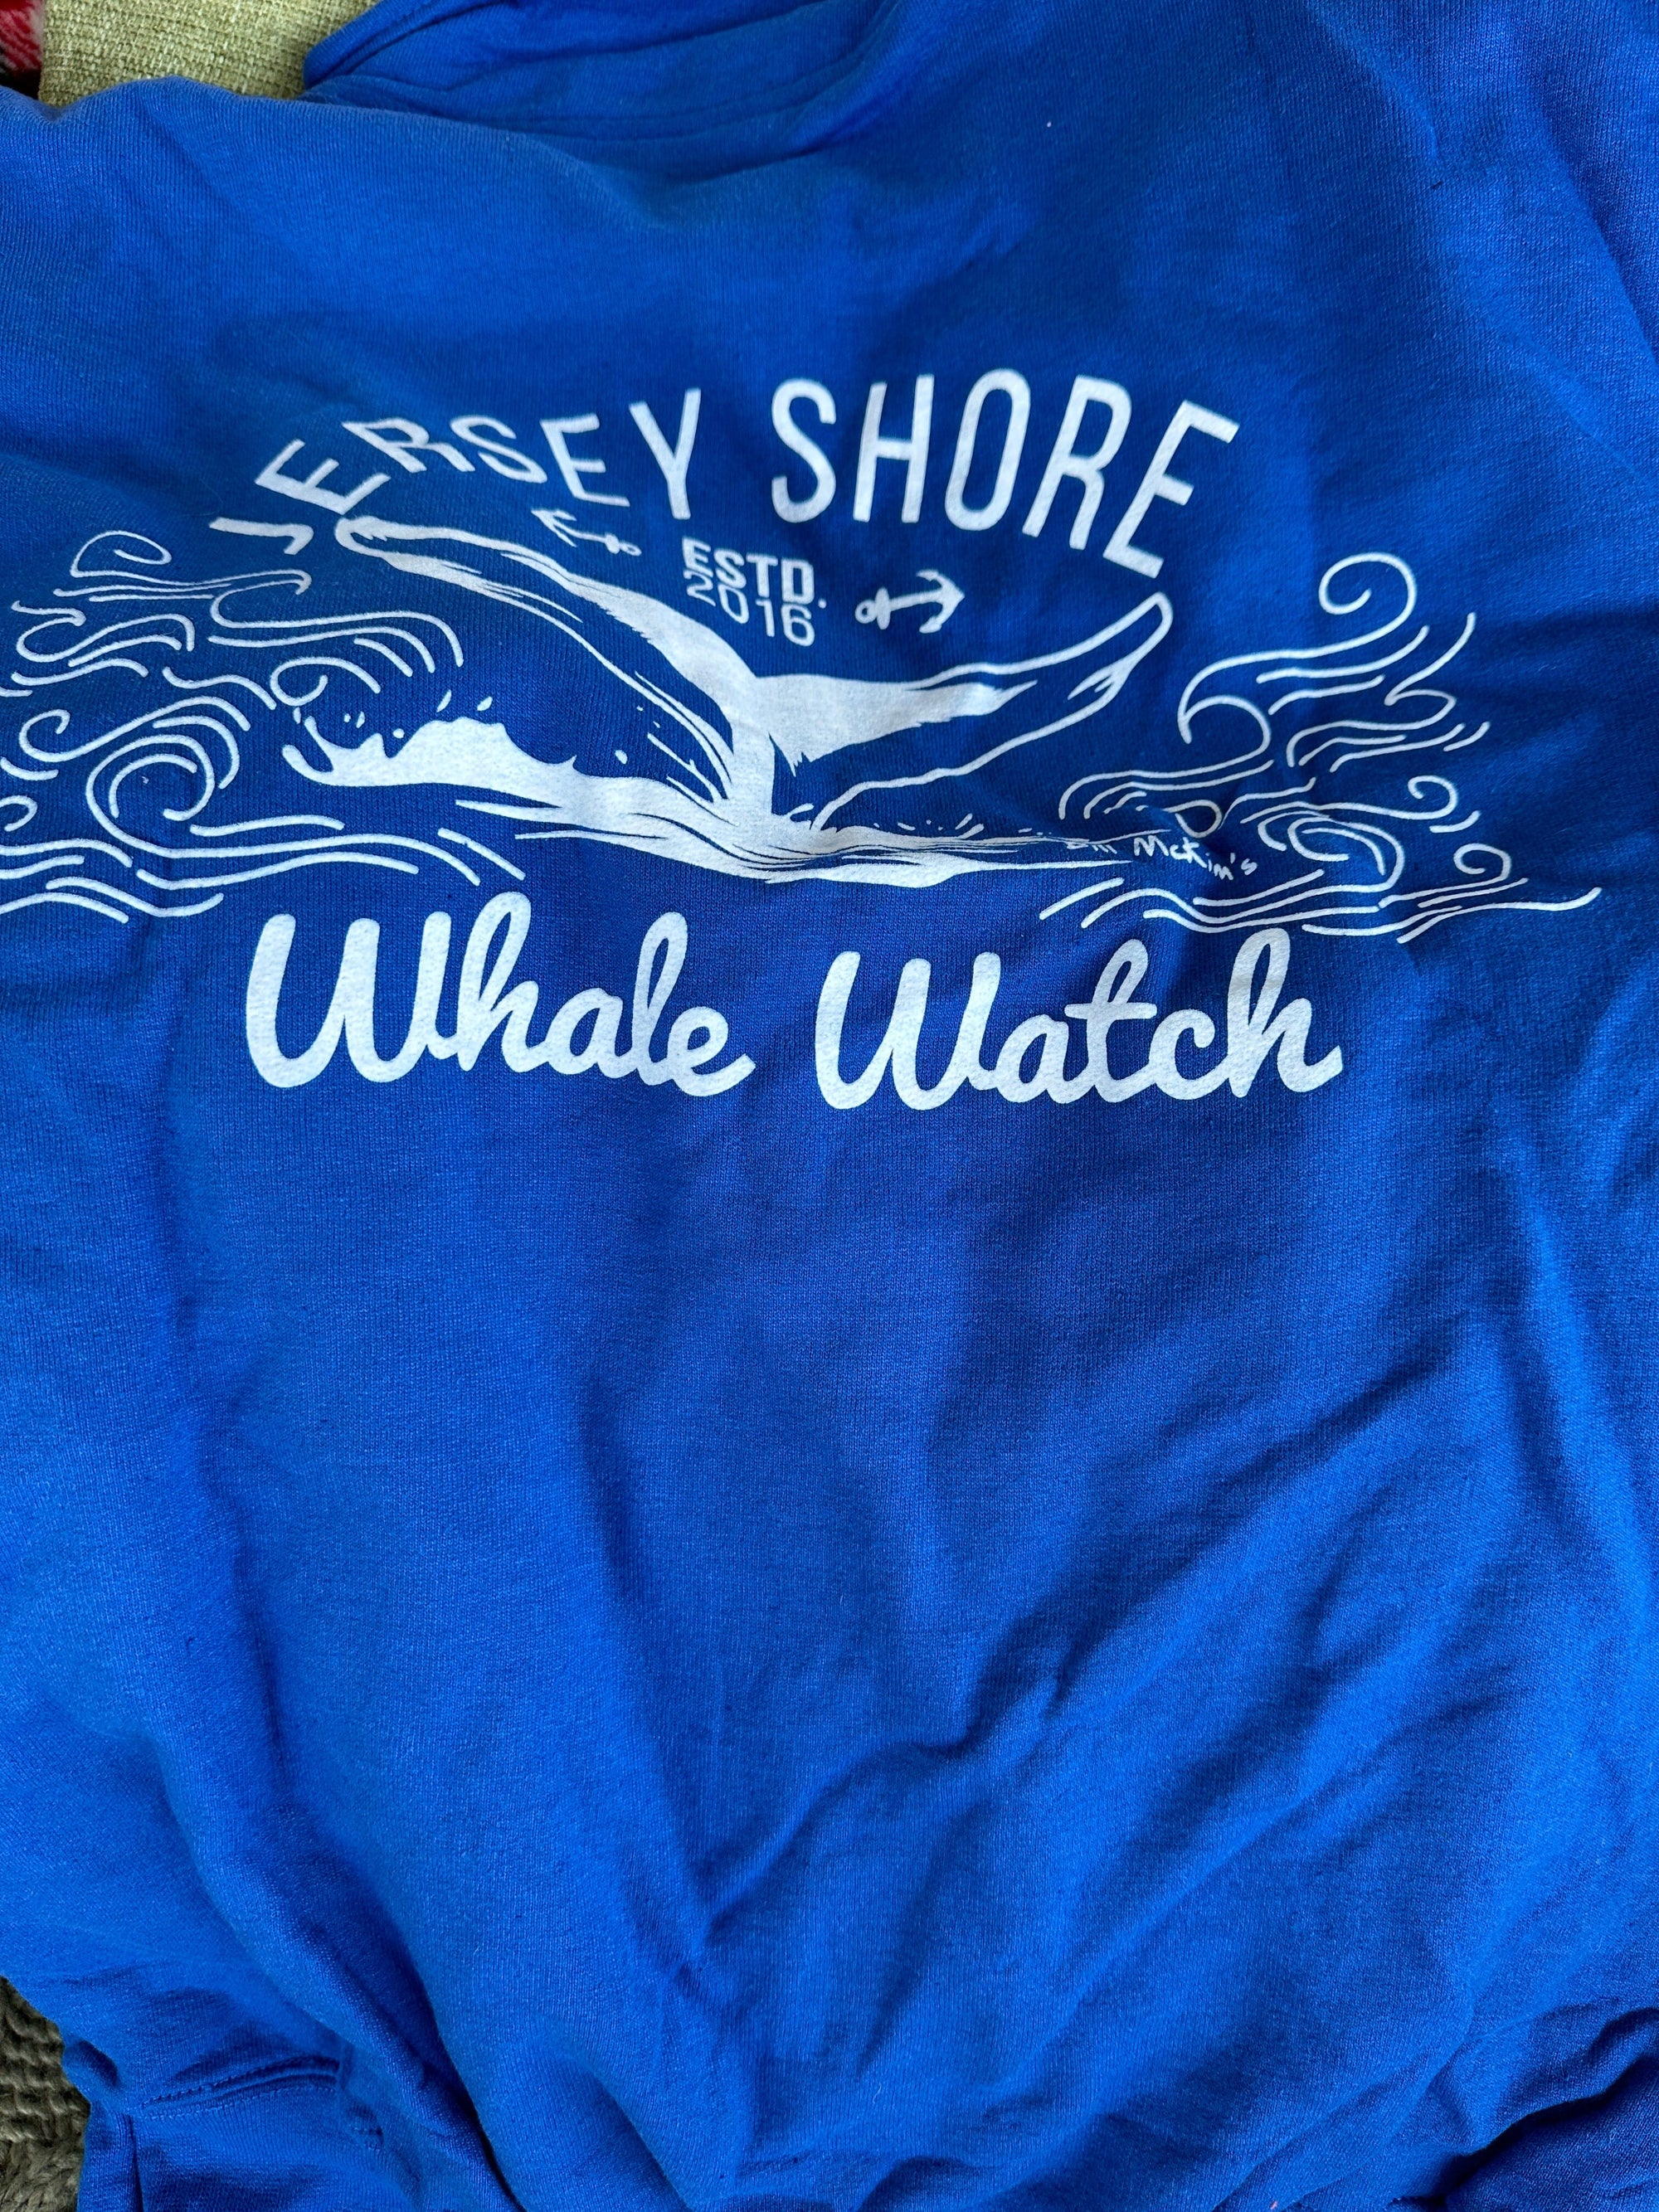 Flash Sale Classic Jersey Shore Whale Watch Sweatshirt printed both sides Bill McKim Photography Small Orange 